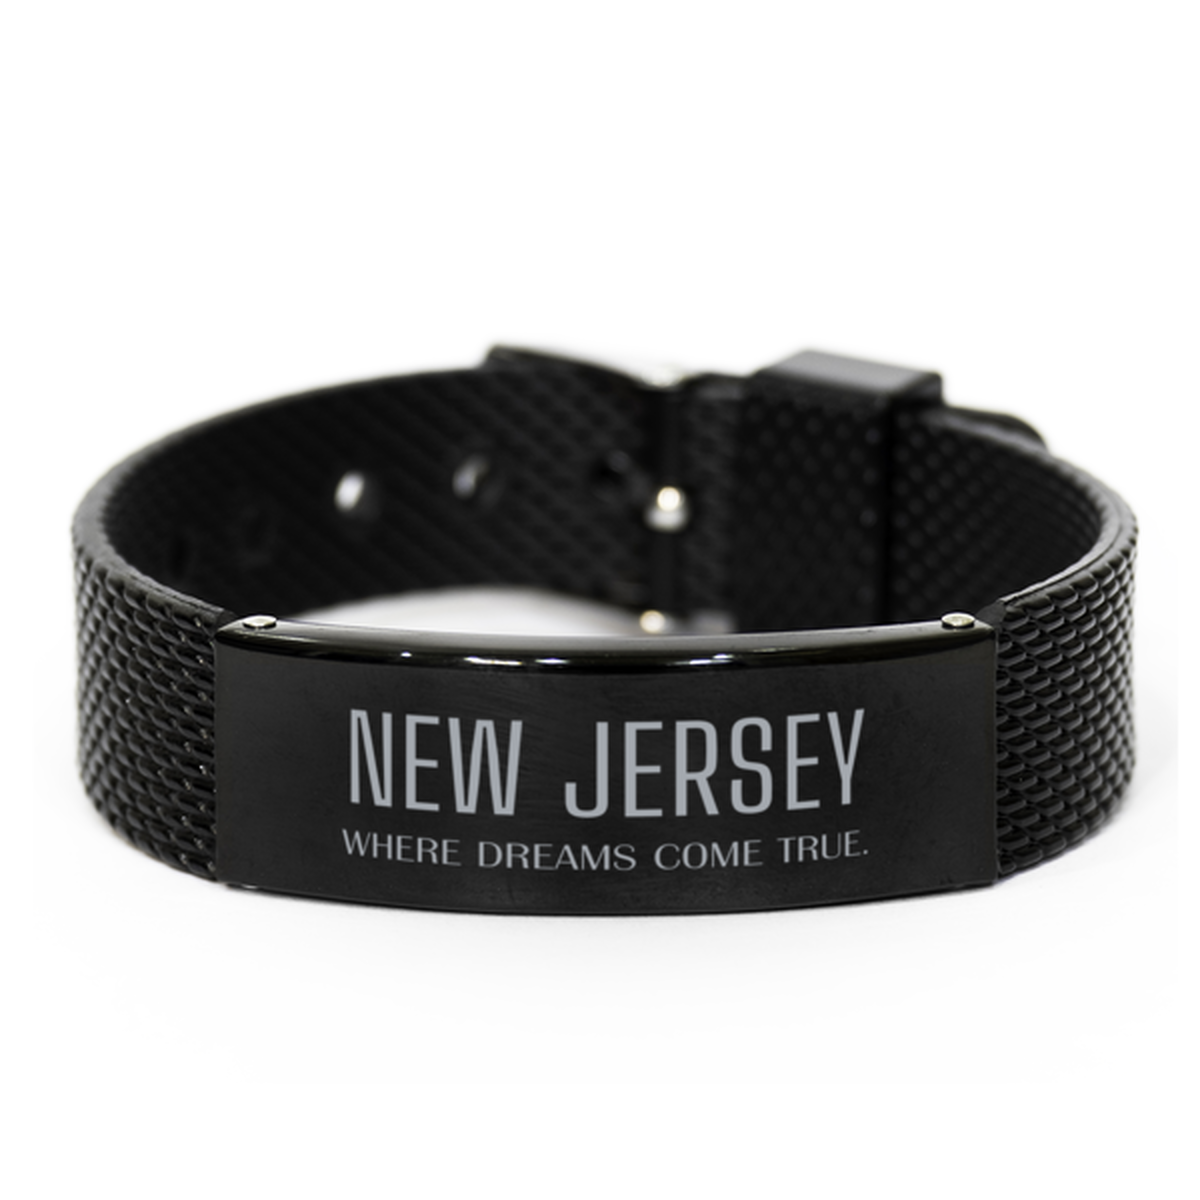 Love New Jersey State Black Shark Mesh Bracelet, New Jersey Where dreams come true, Birthday Inspirational Gifts For New Jersey Men, Women, Friends